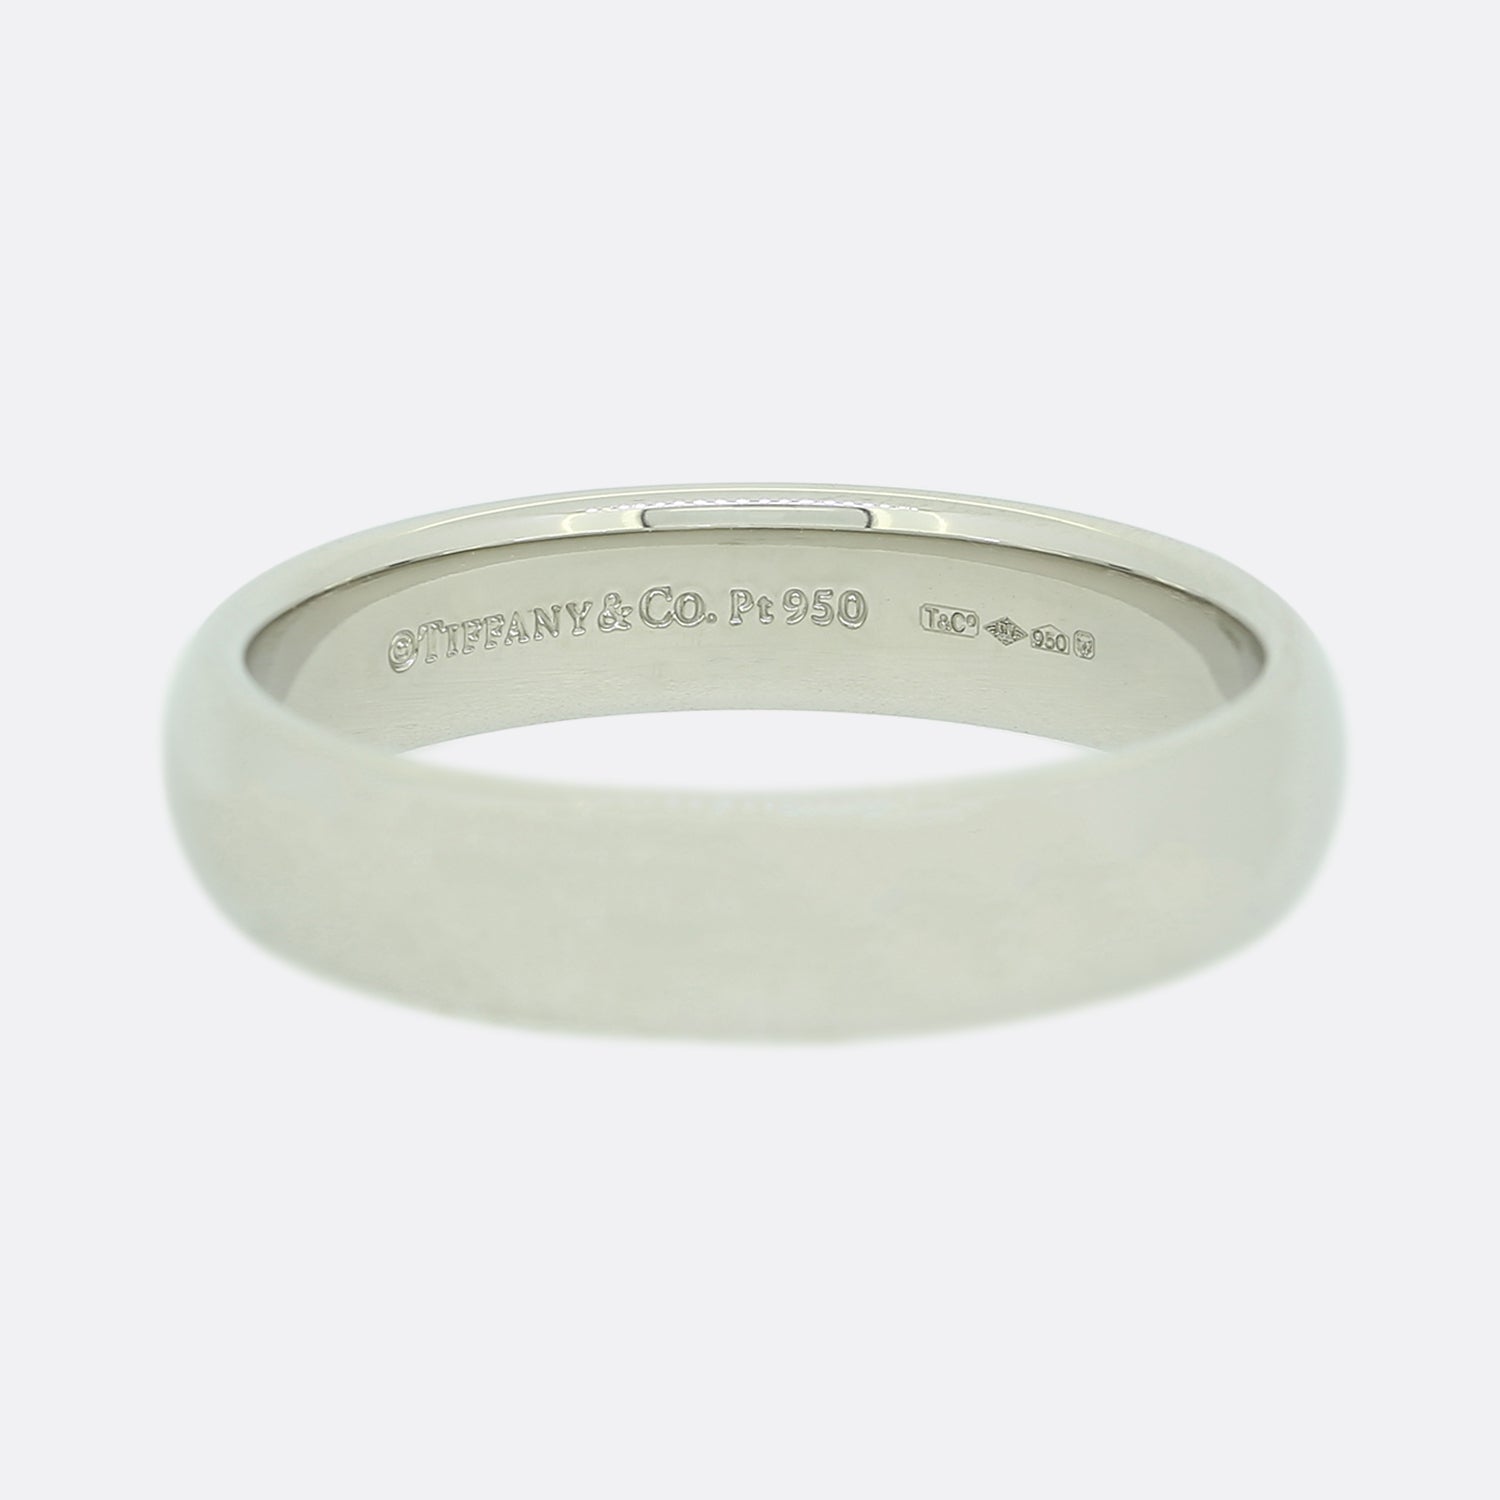 Tiffany & Co. 1837 Medium Ring Size 8 | Ring size, Classic ring, Rings